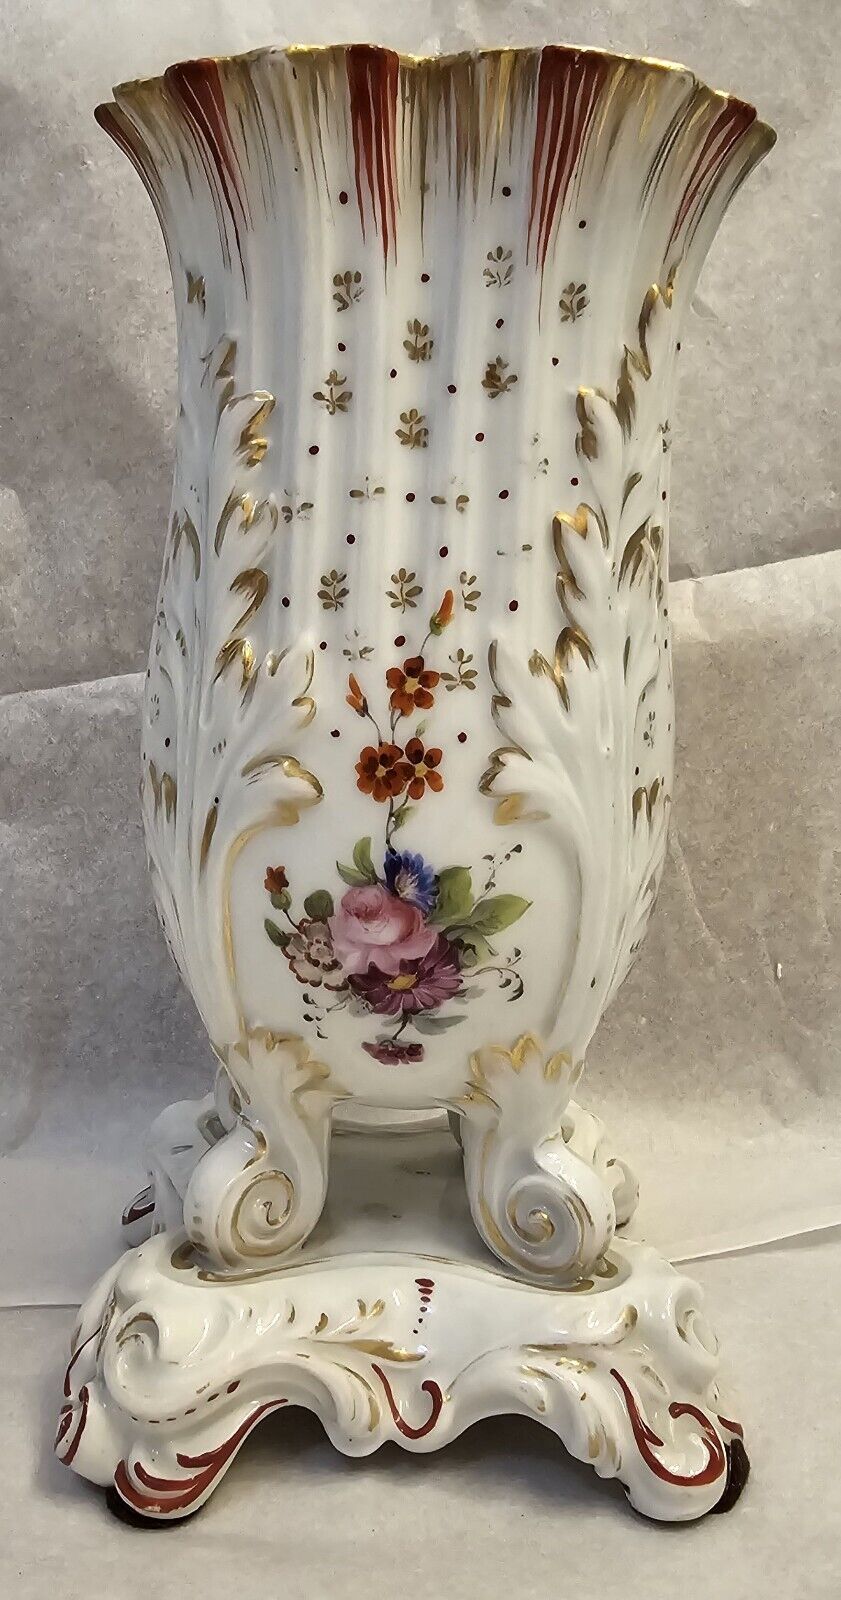 Antique c1850 Paris Porcelain Napoleon III Mantle Vases, Gilded - Hand Painted